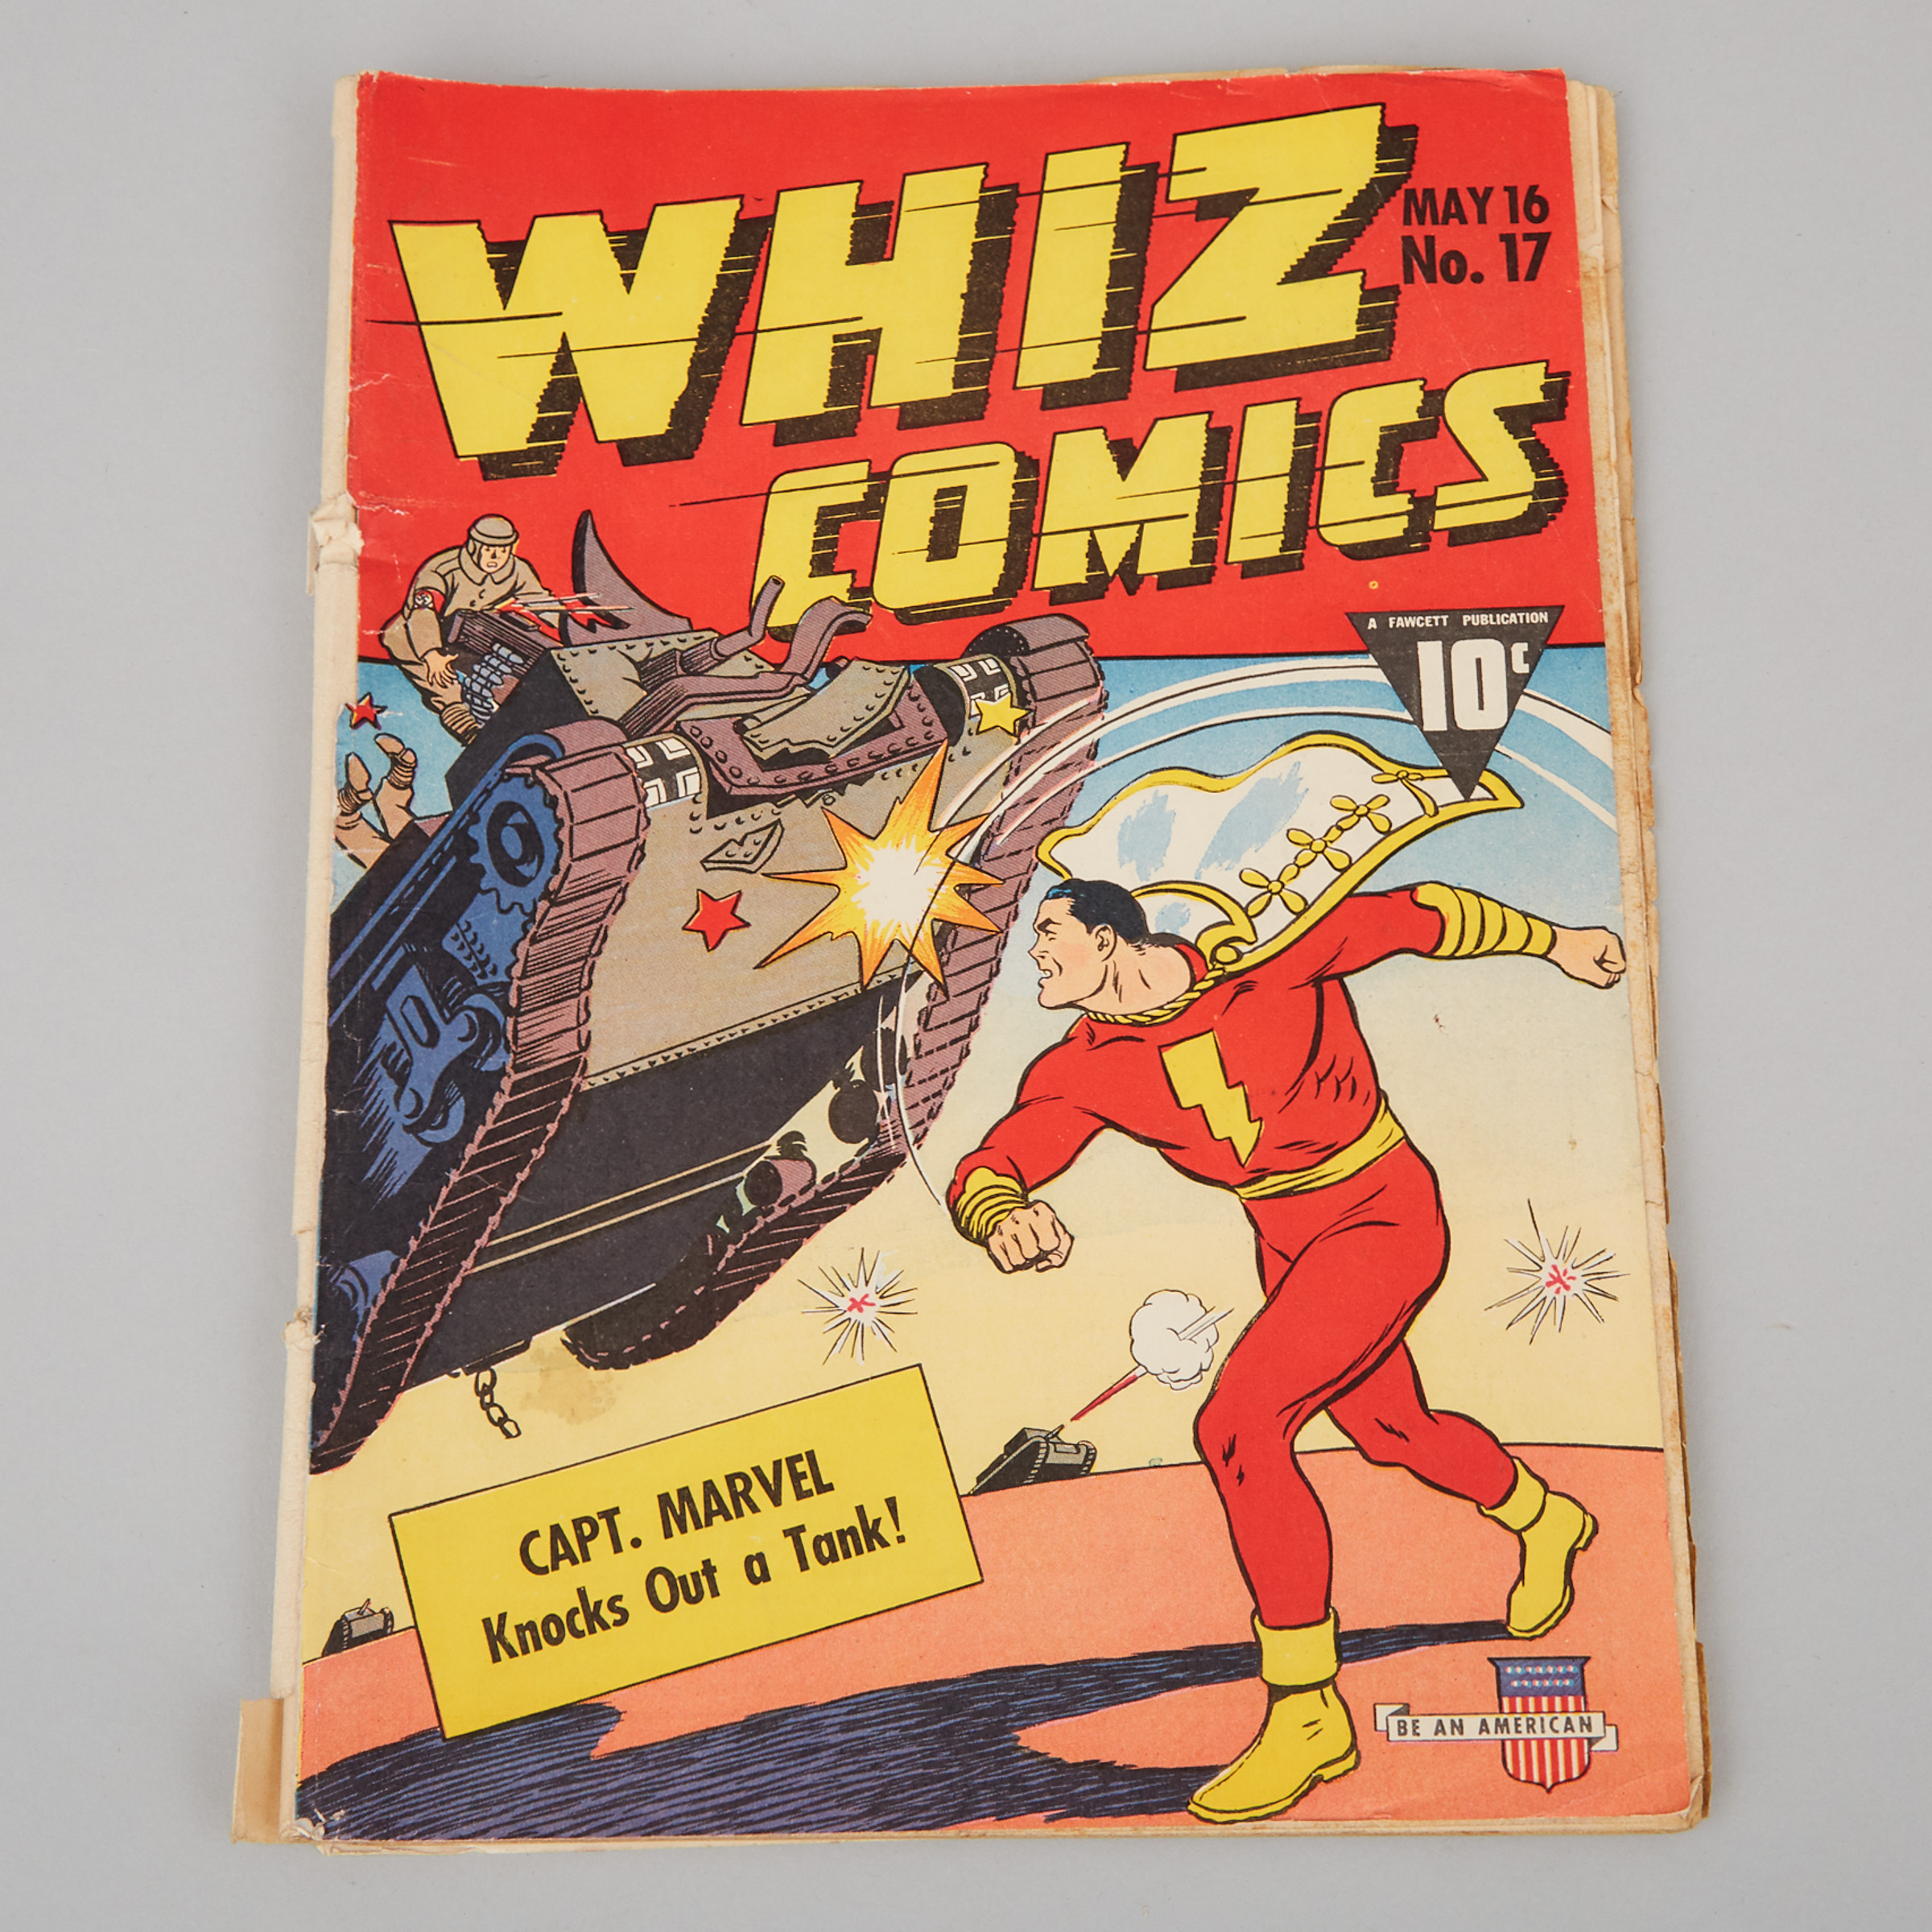 Fawcett Publications Whiz Comics 'Captain Marvel' No. 17, May 16, 1941